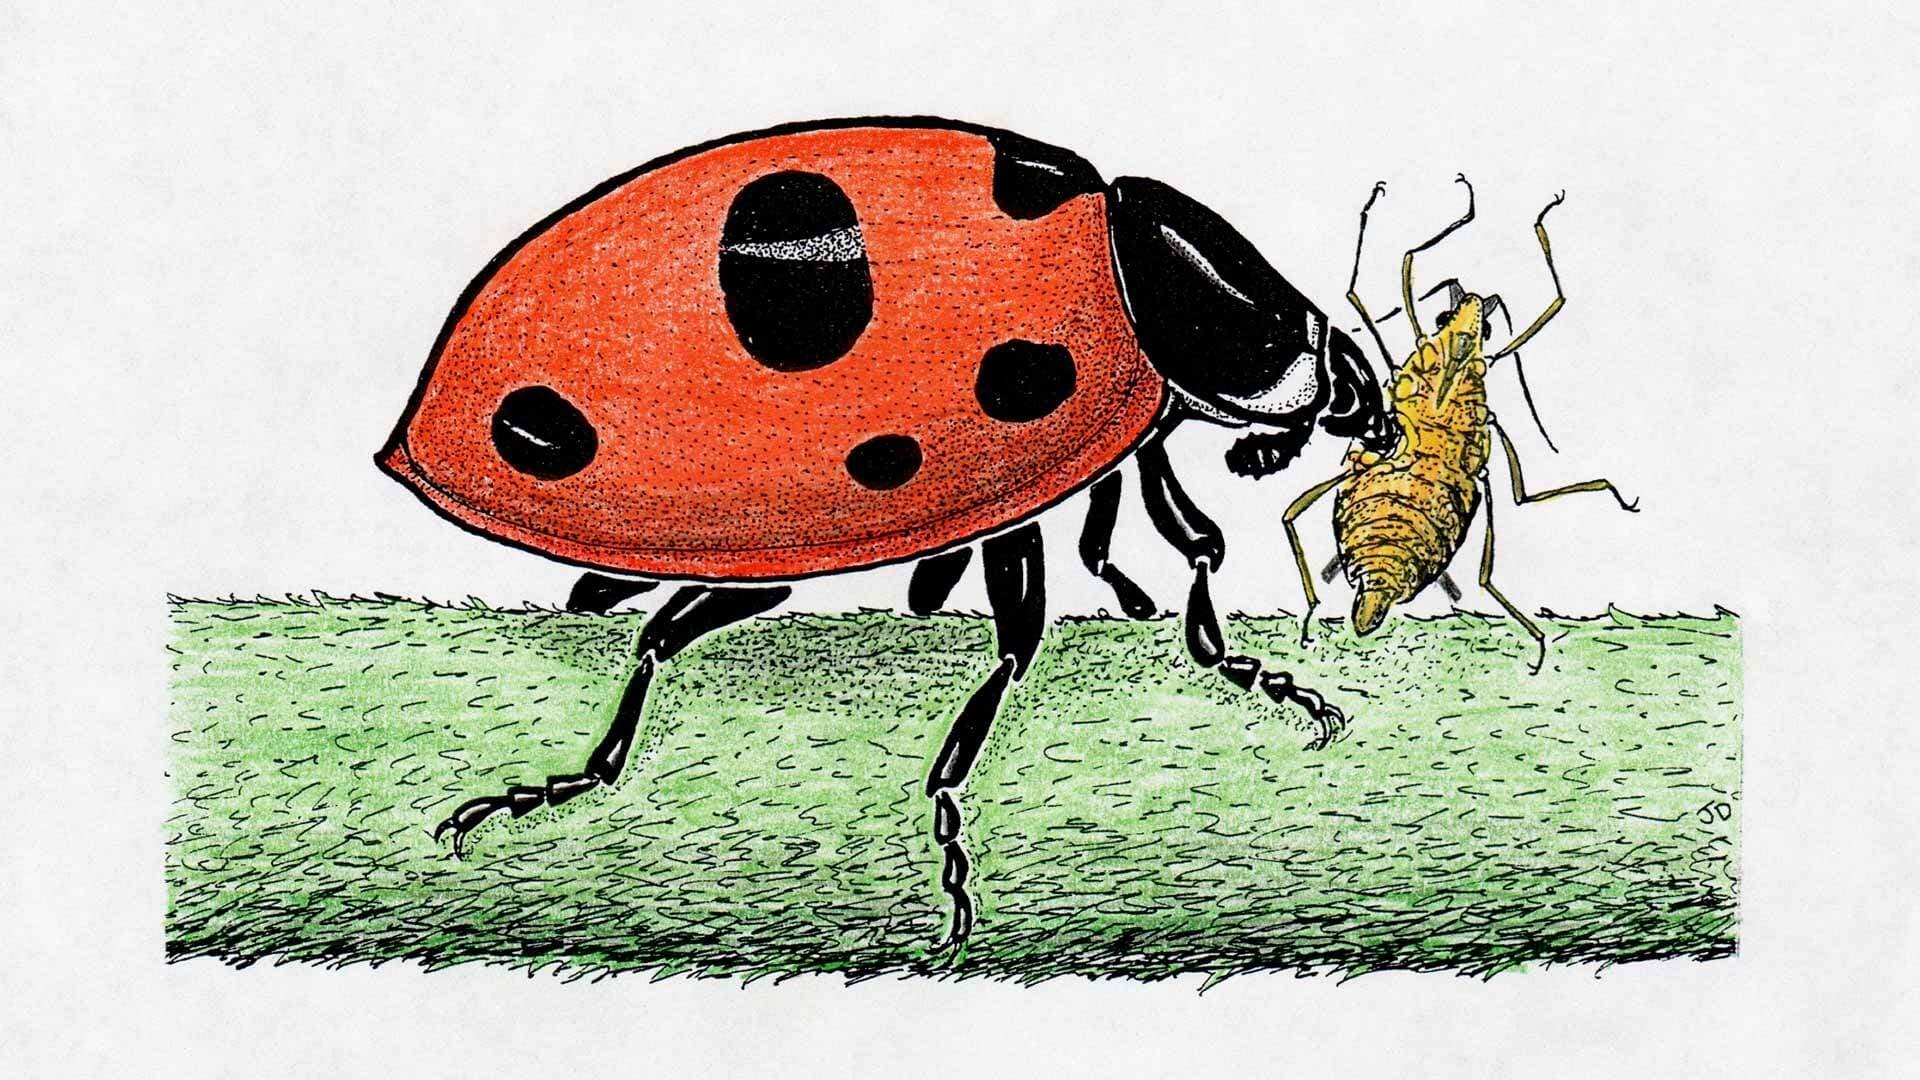 nine spotted ladybug illustration